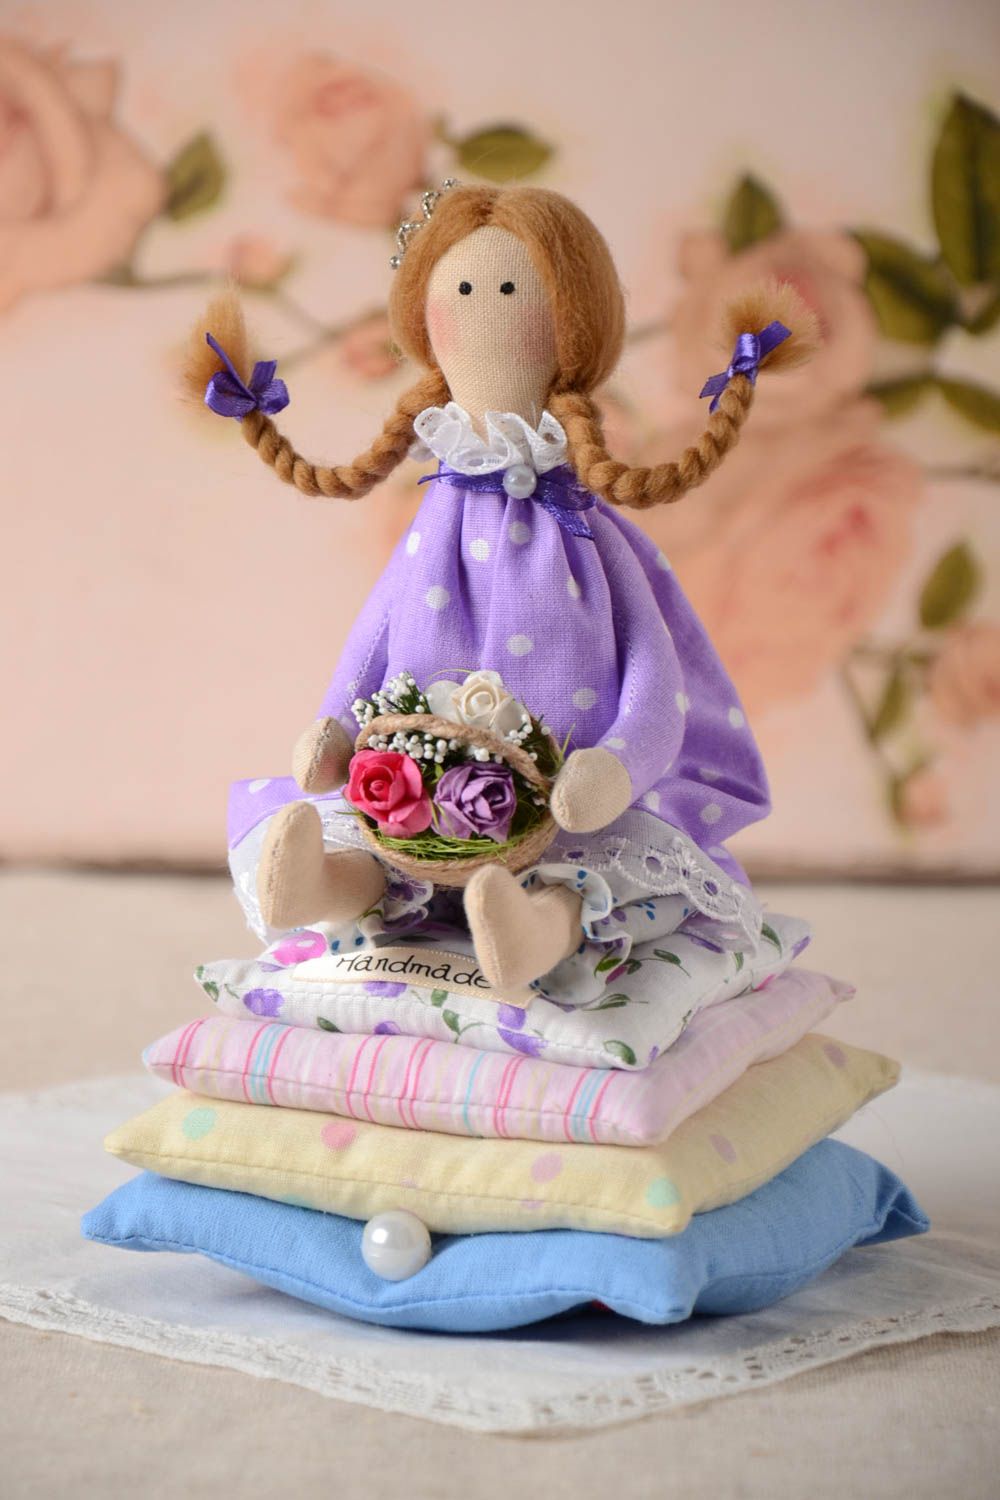 Beautiful handmade fabric doll collectible rag doll room decor ideas photo 1